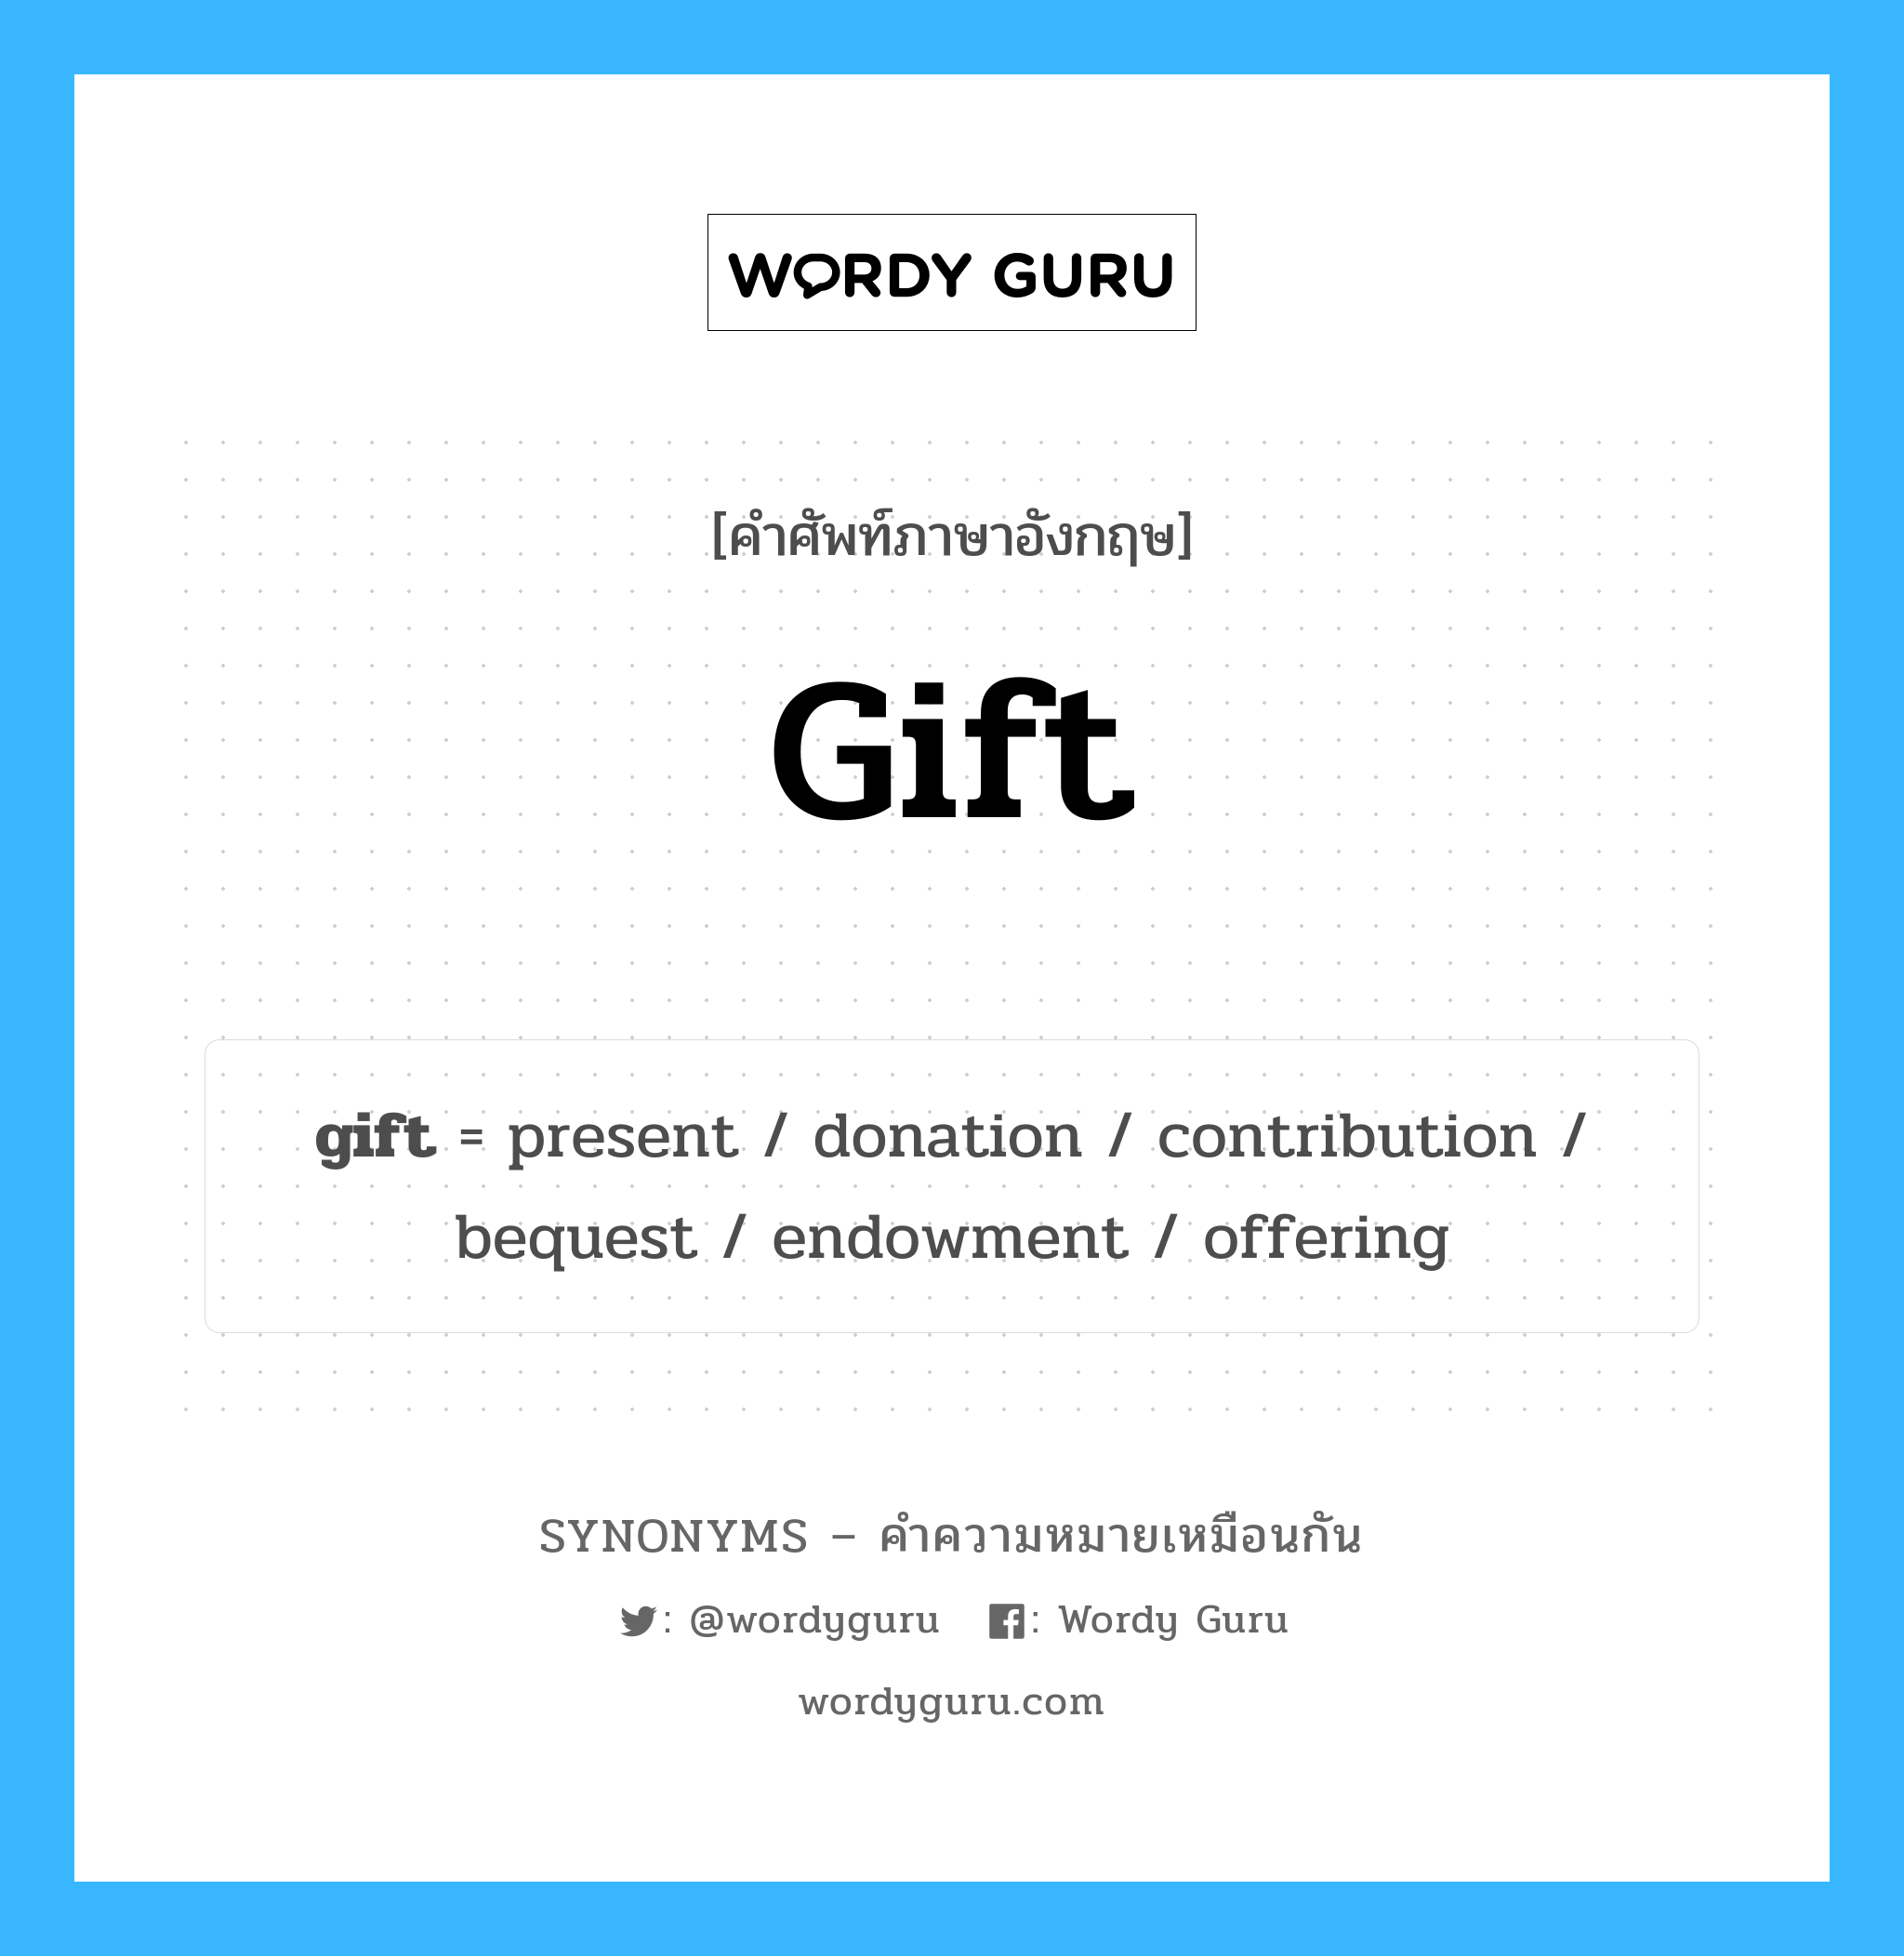 offering เป็นหนึ่งใน gift และมีคำอื่น ๆ อีกดังนี้, คำศัพท์ภาษาอังกฤษ offering ความหมายคล้ายกันกับ gift แปลว่า อำนวยความสะดวก หมวด gift